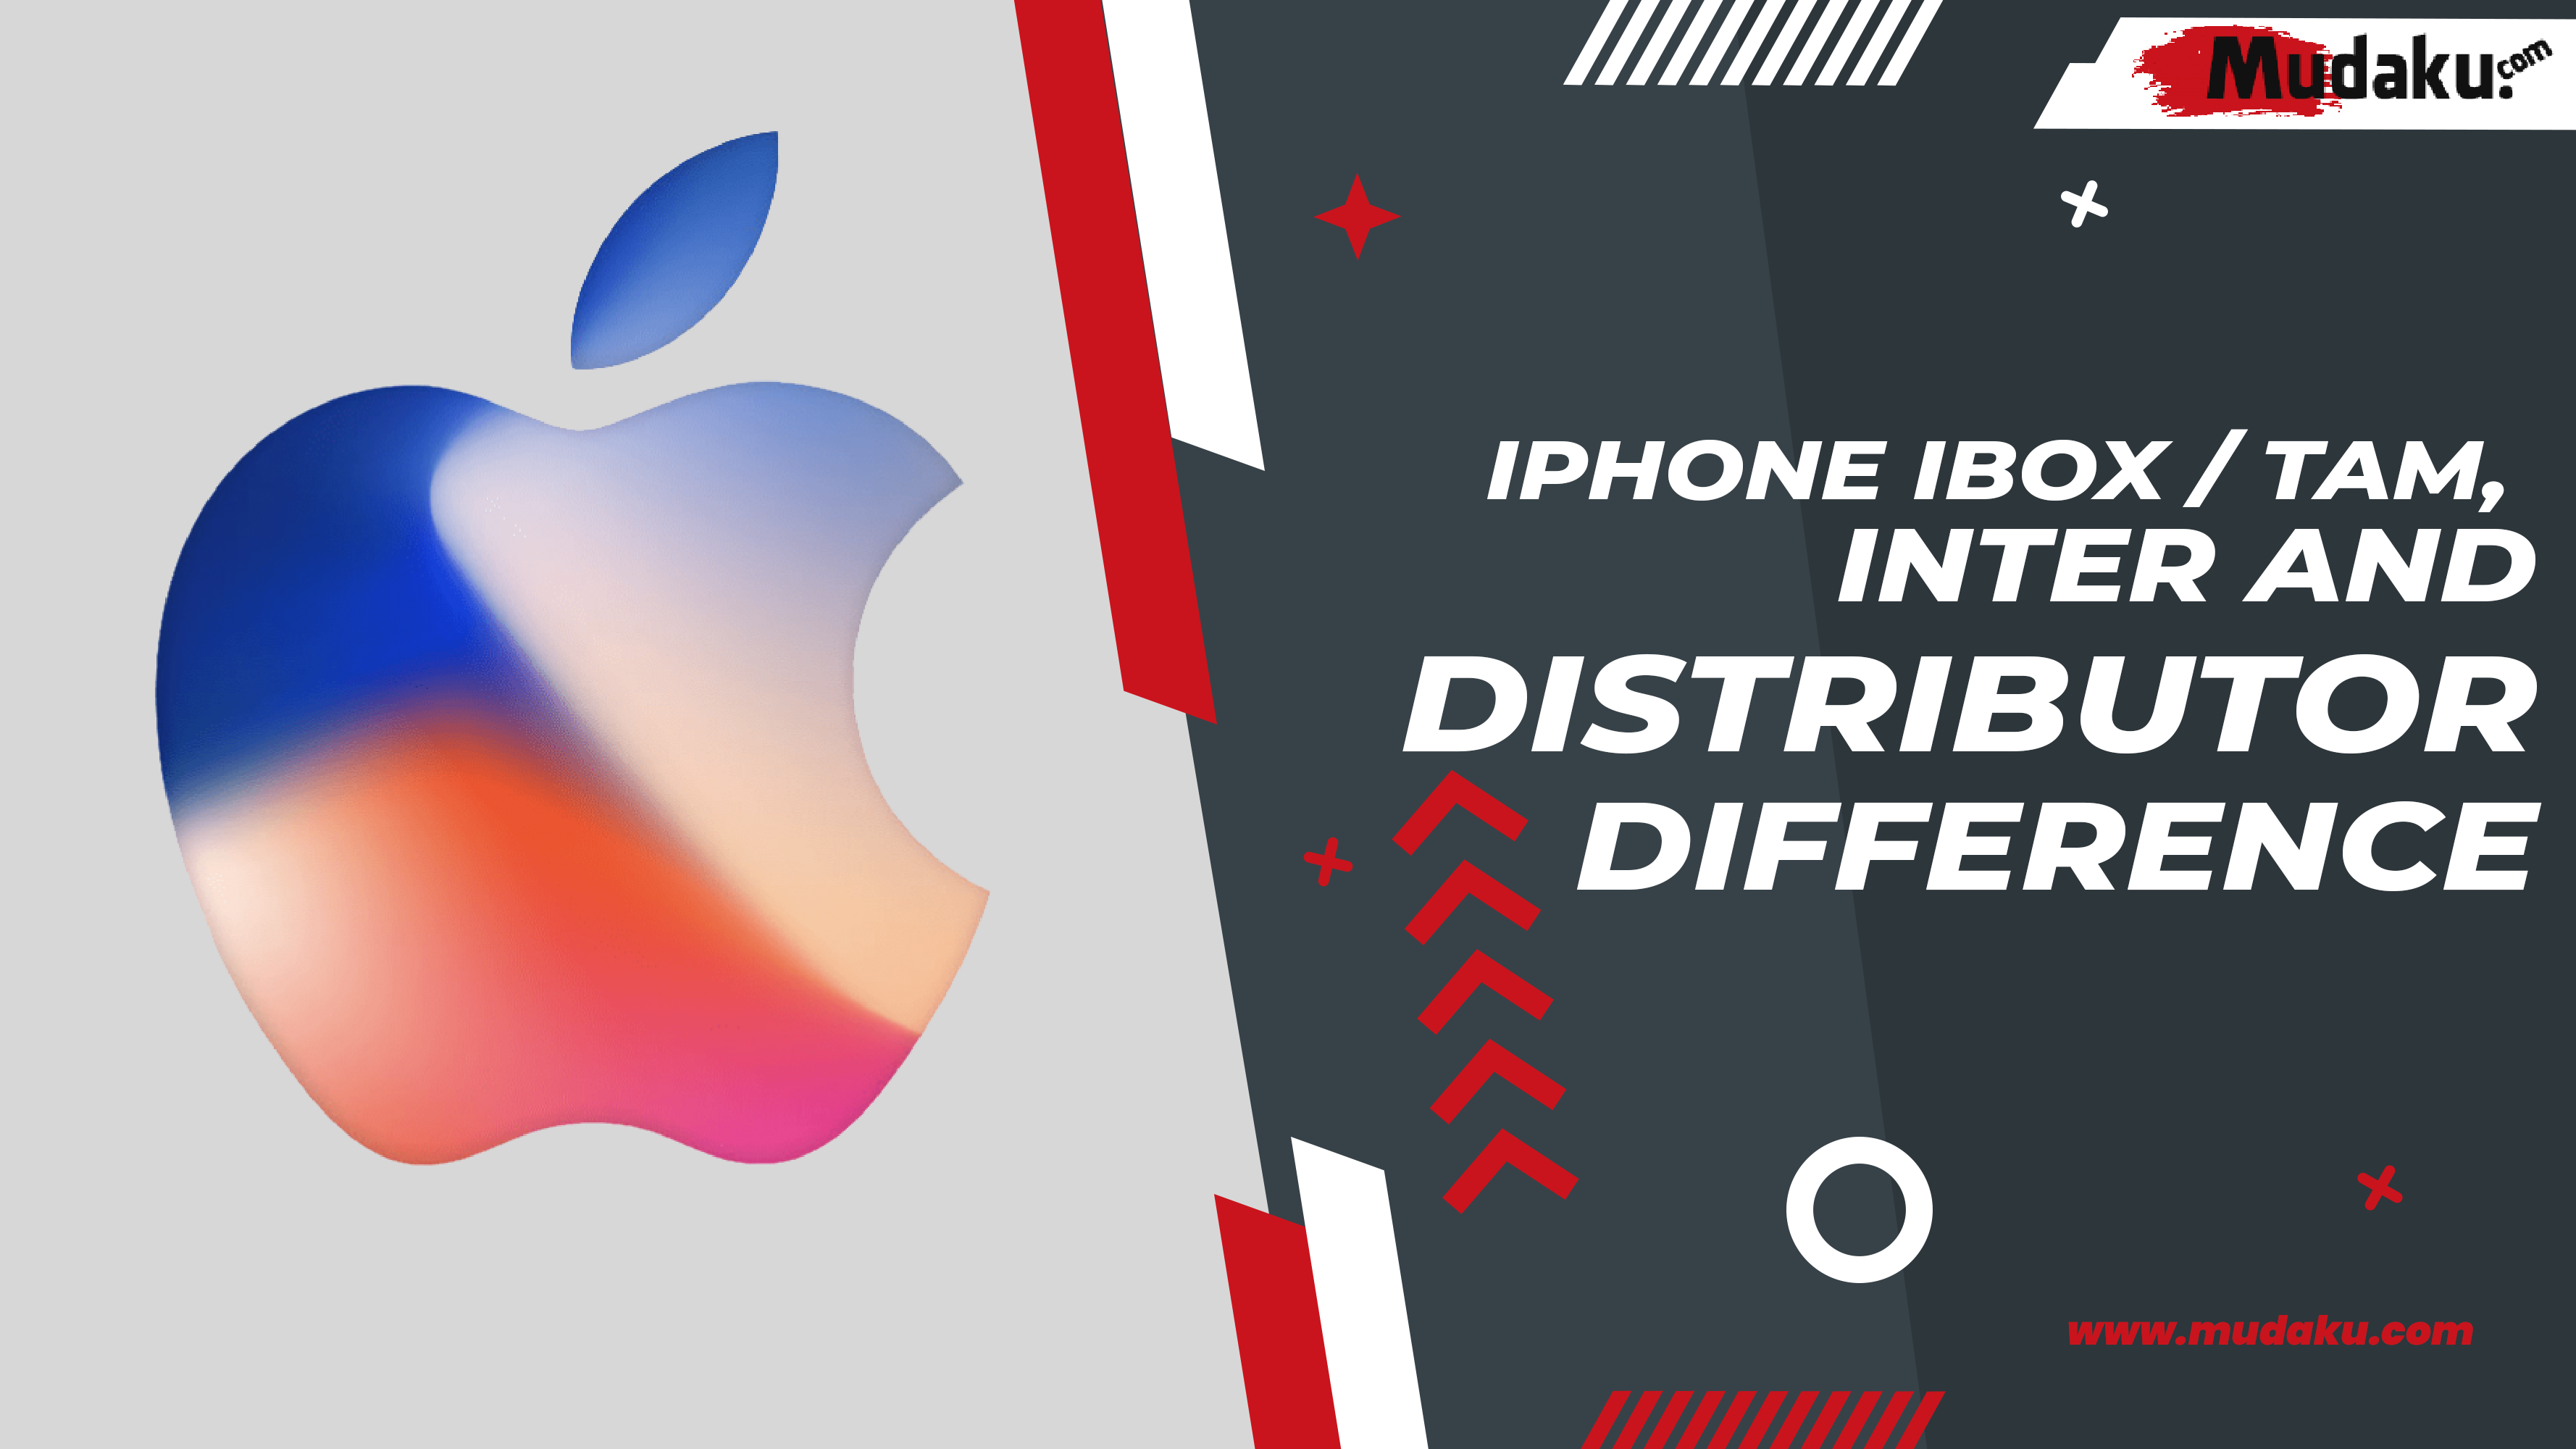 iPhone iBox / TAM, Inter, and Distributor Diferrence